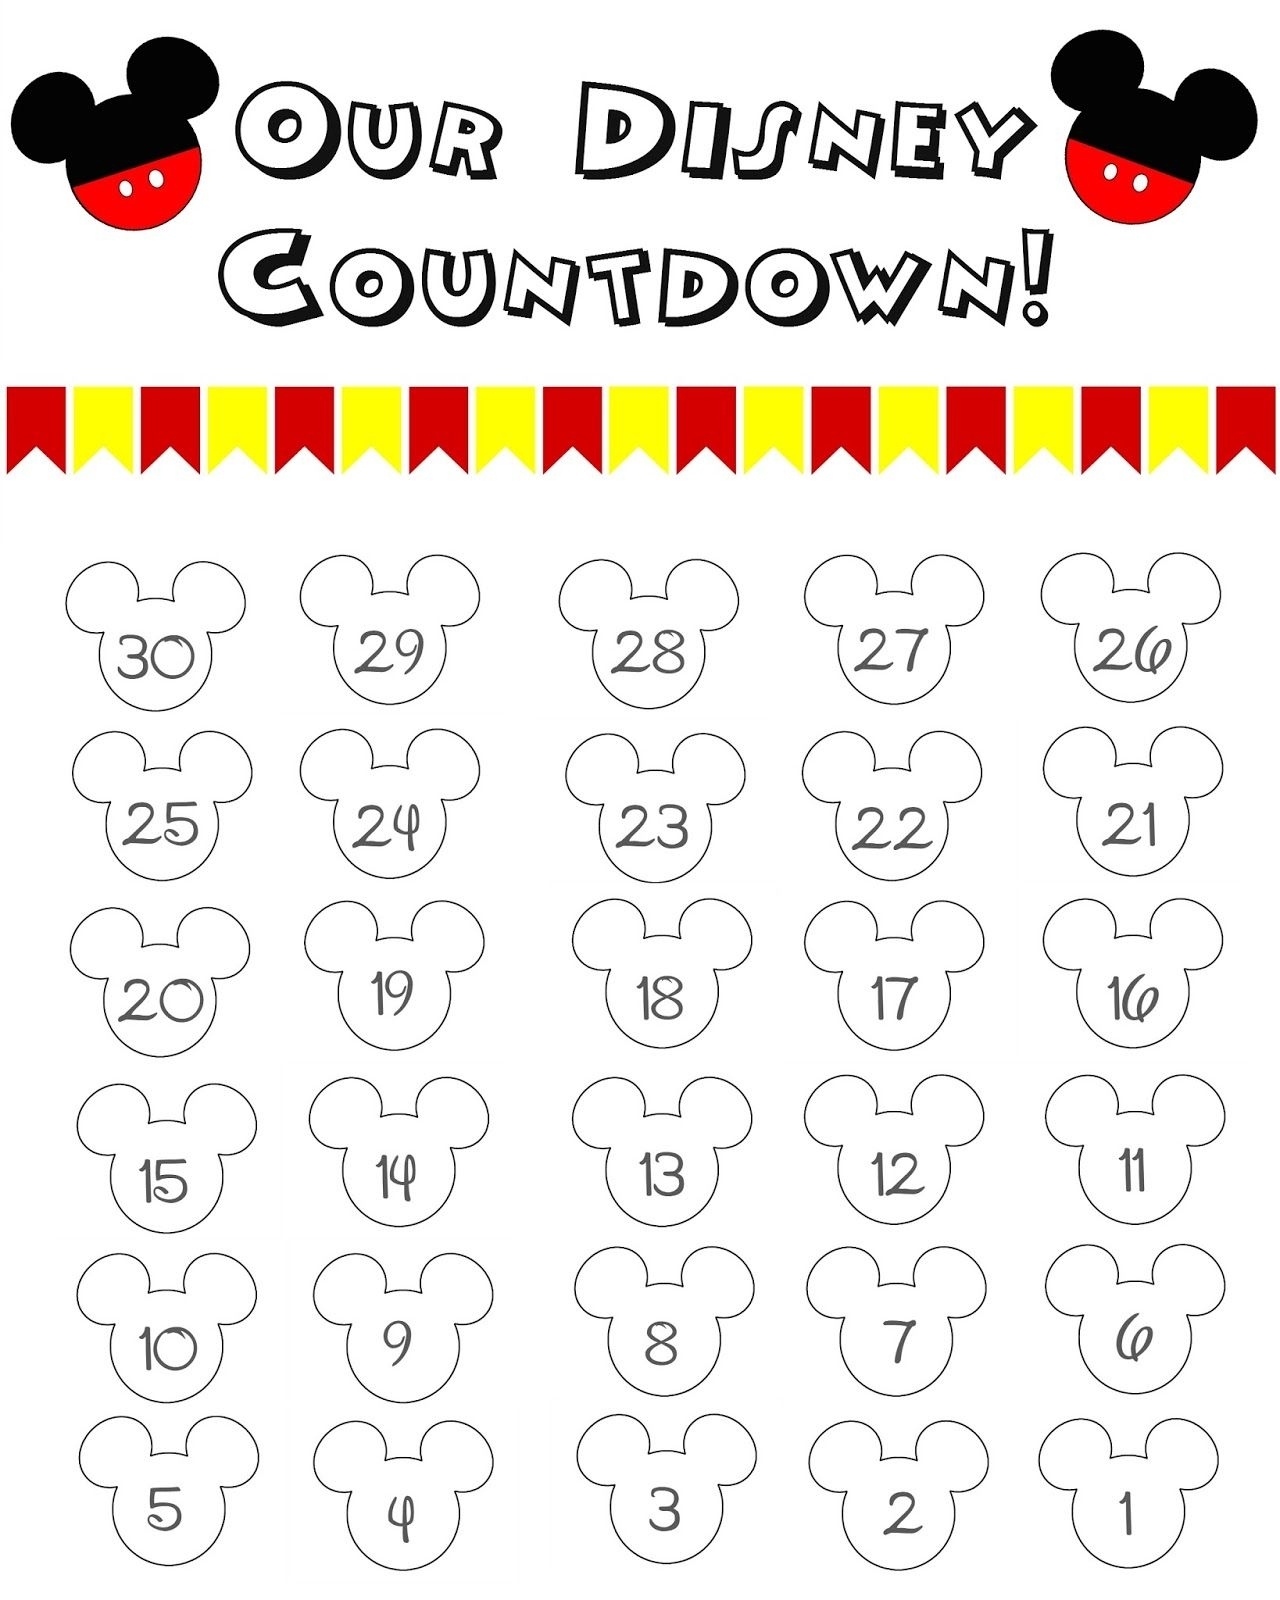 Disney World Countdown Calendar - Free Printable | Disney Free Printable Countdown Calendar Template